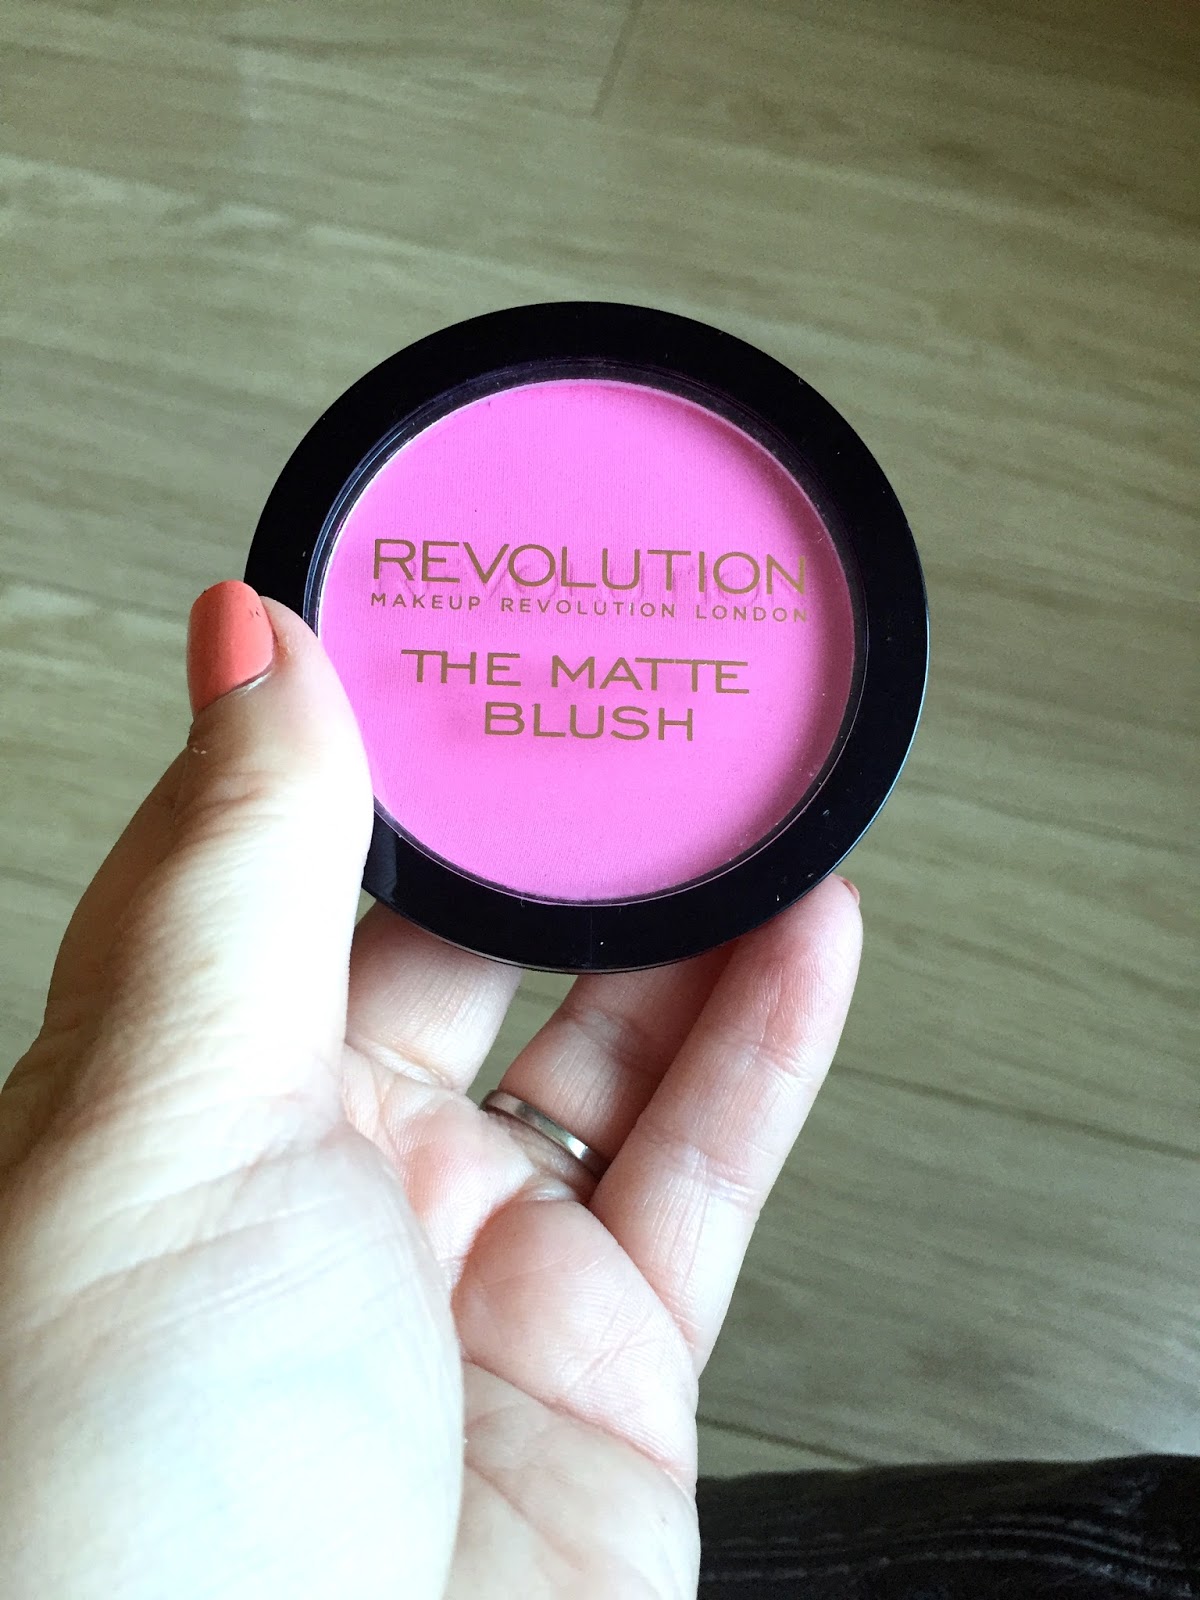 Makeup Revolution The Matte Blush Review - Beauddiction